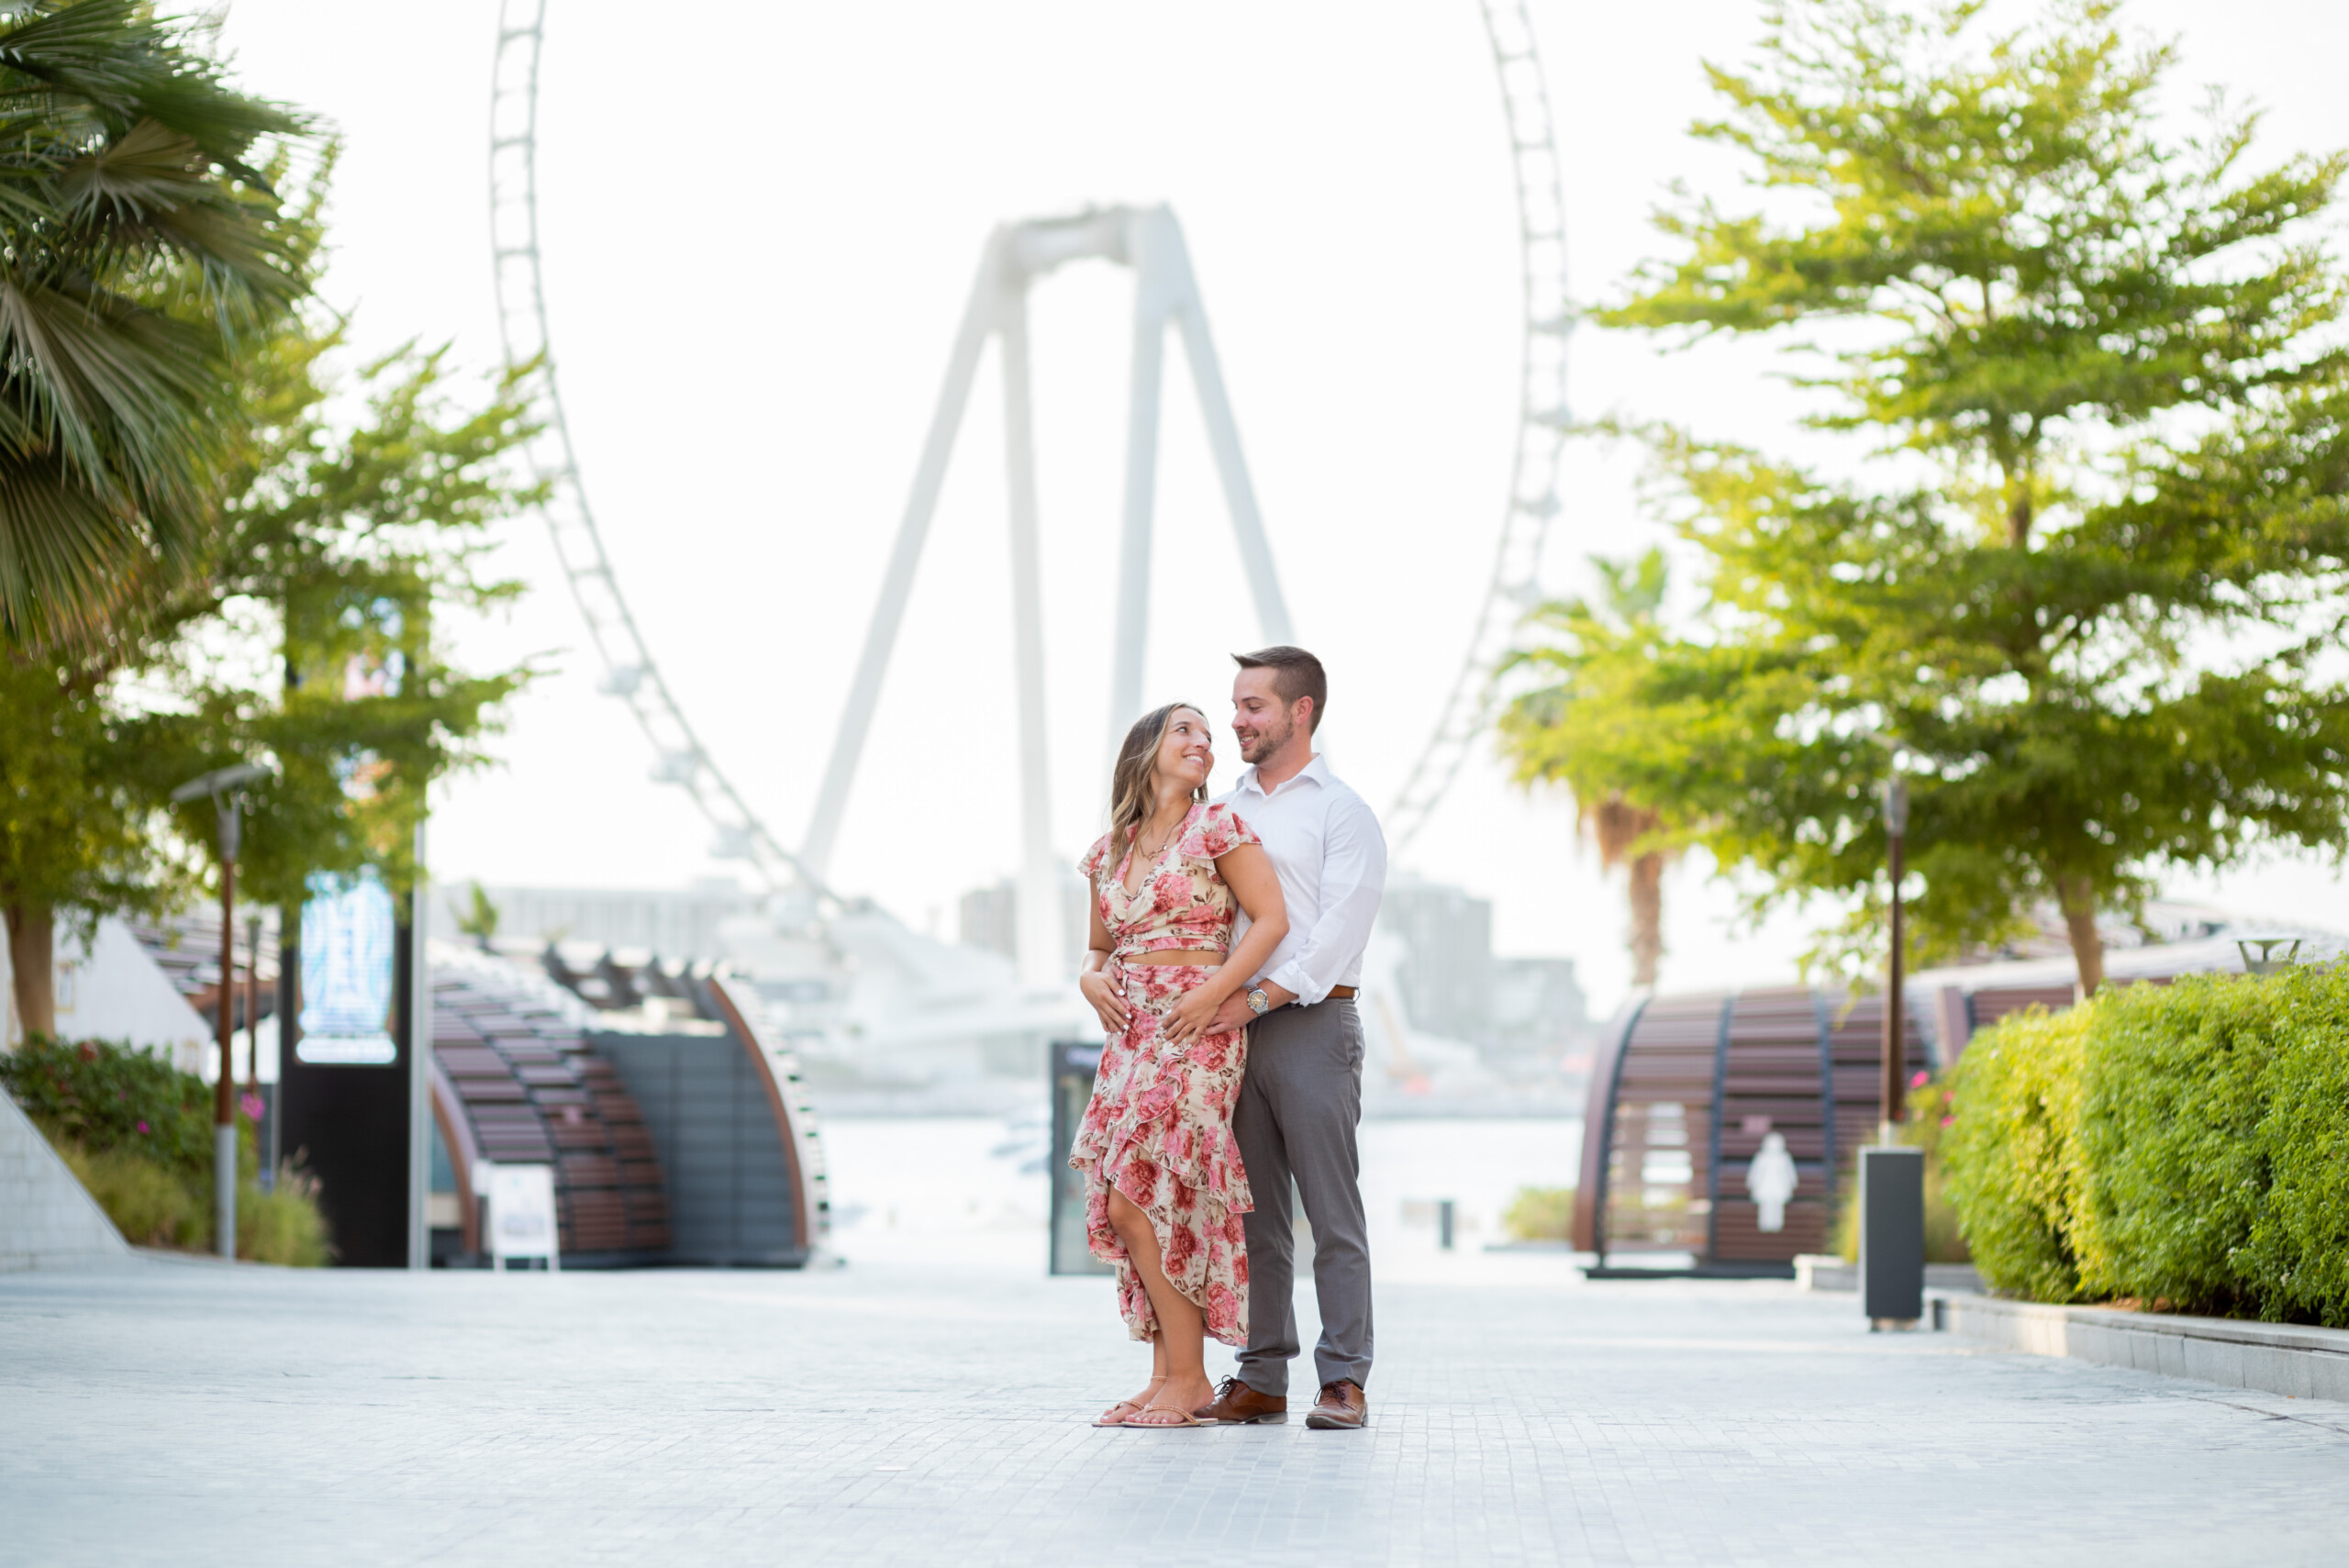 Couple's photoshoot by Nadia, Localgrapher in Dubai